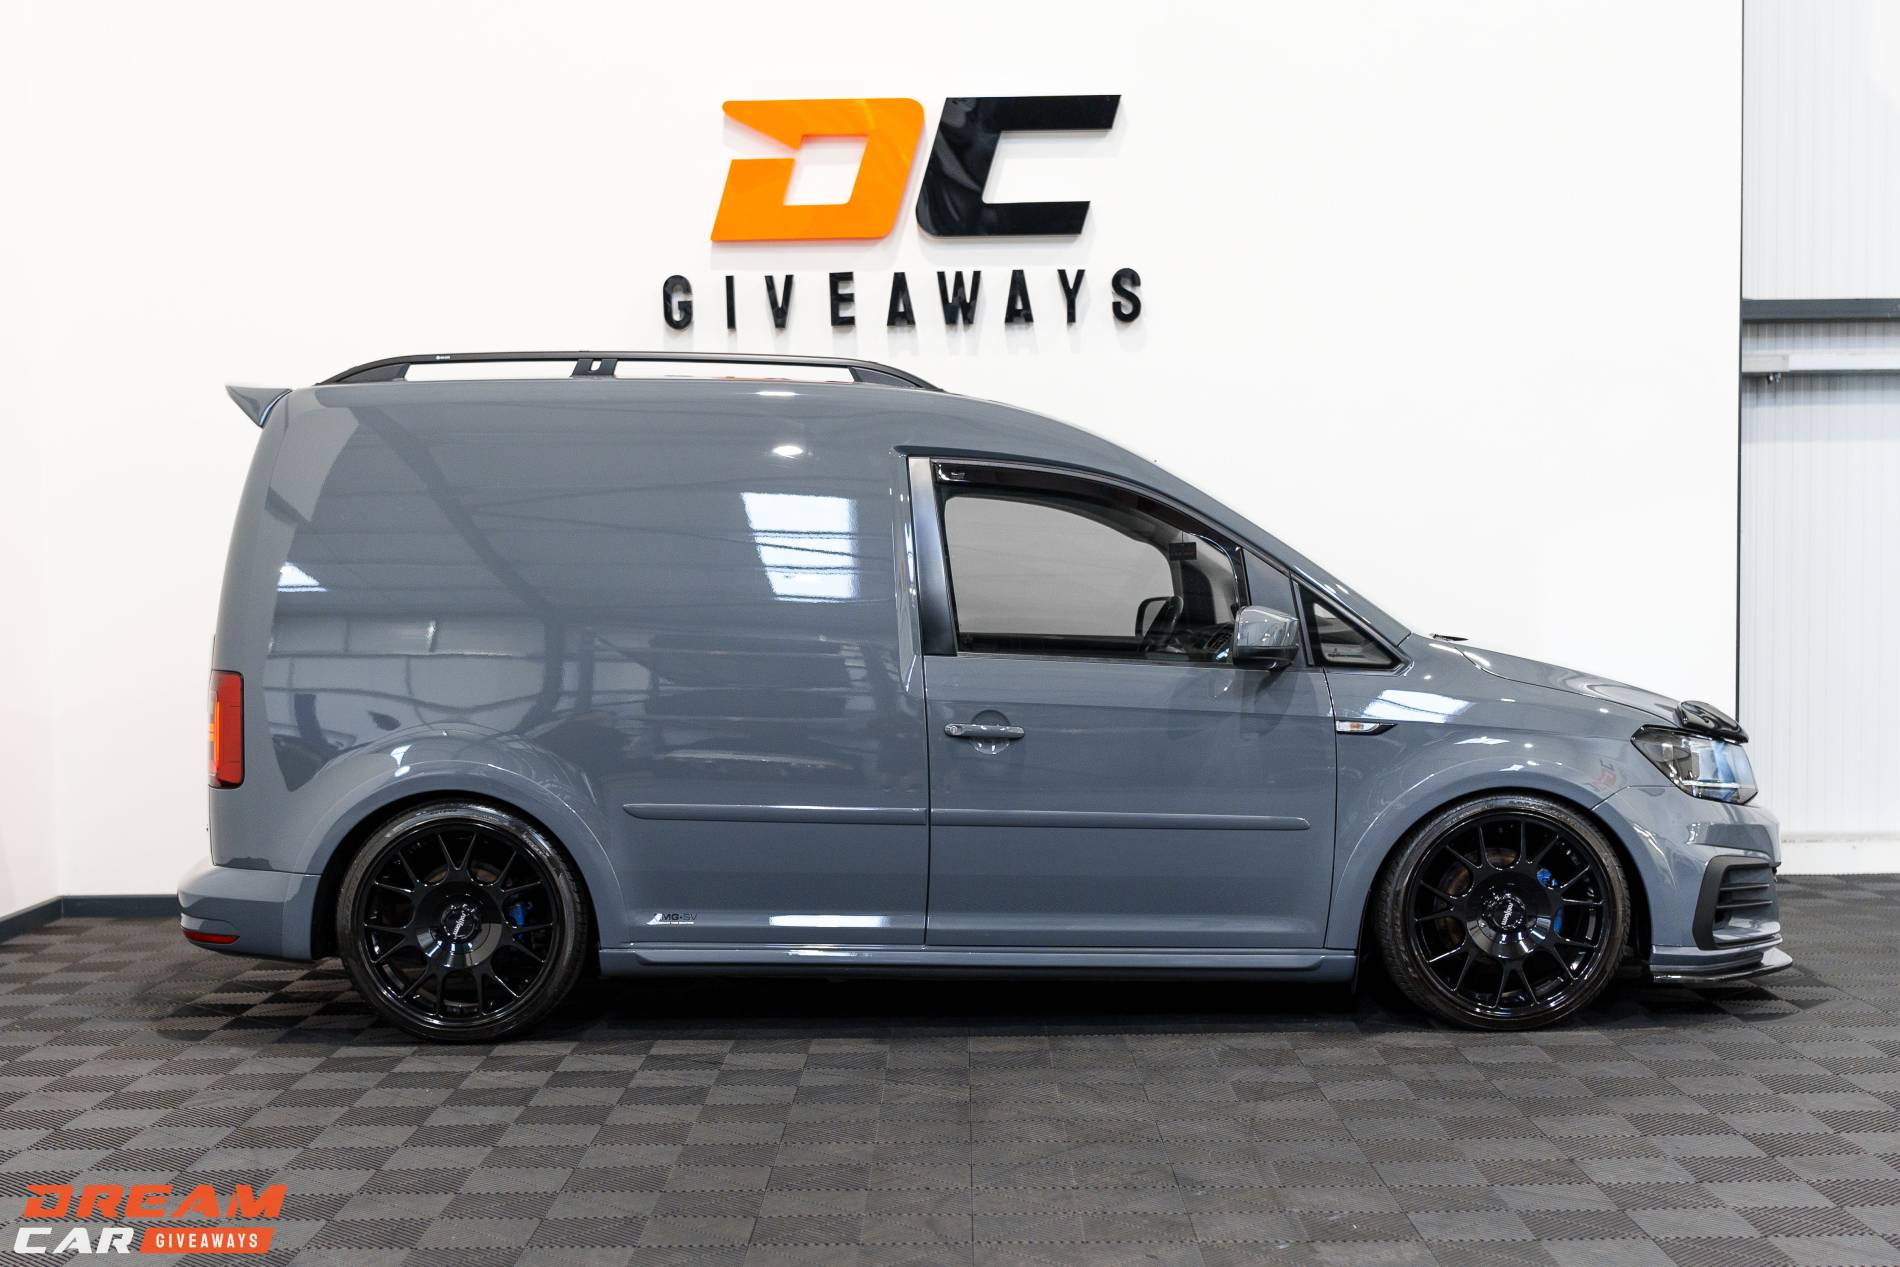 Win this Pure Grey Volkswagen Caddy & £2,000